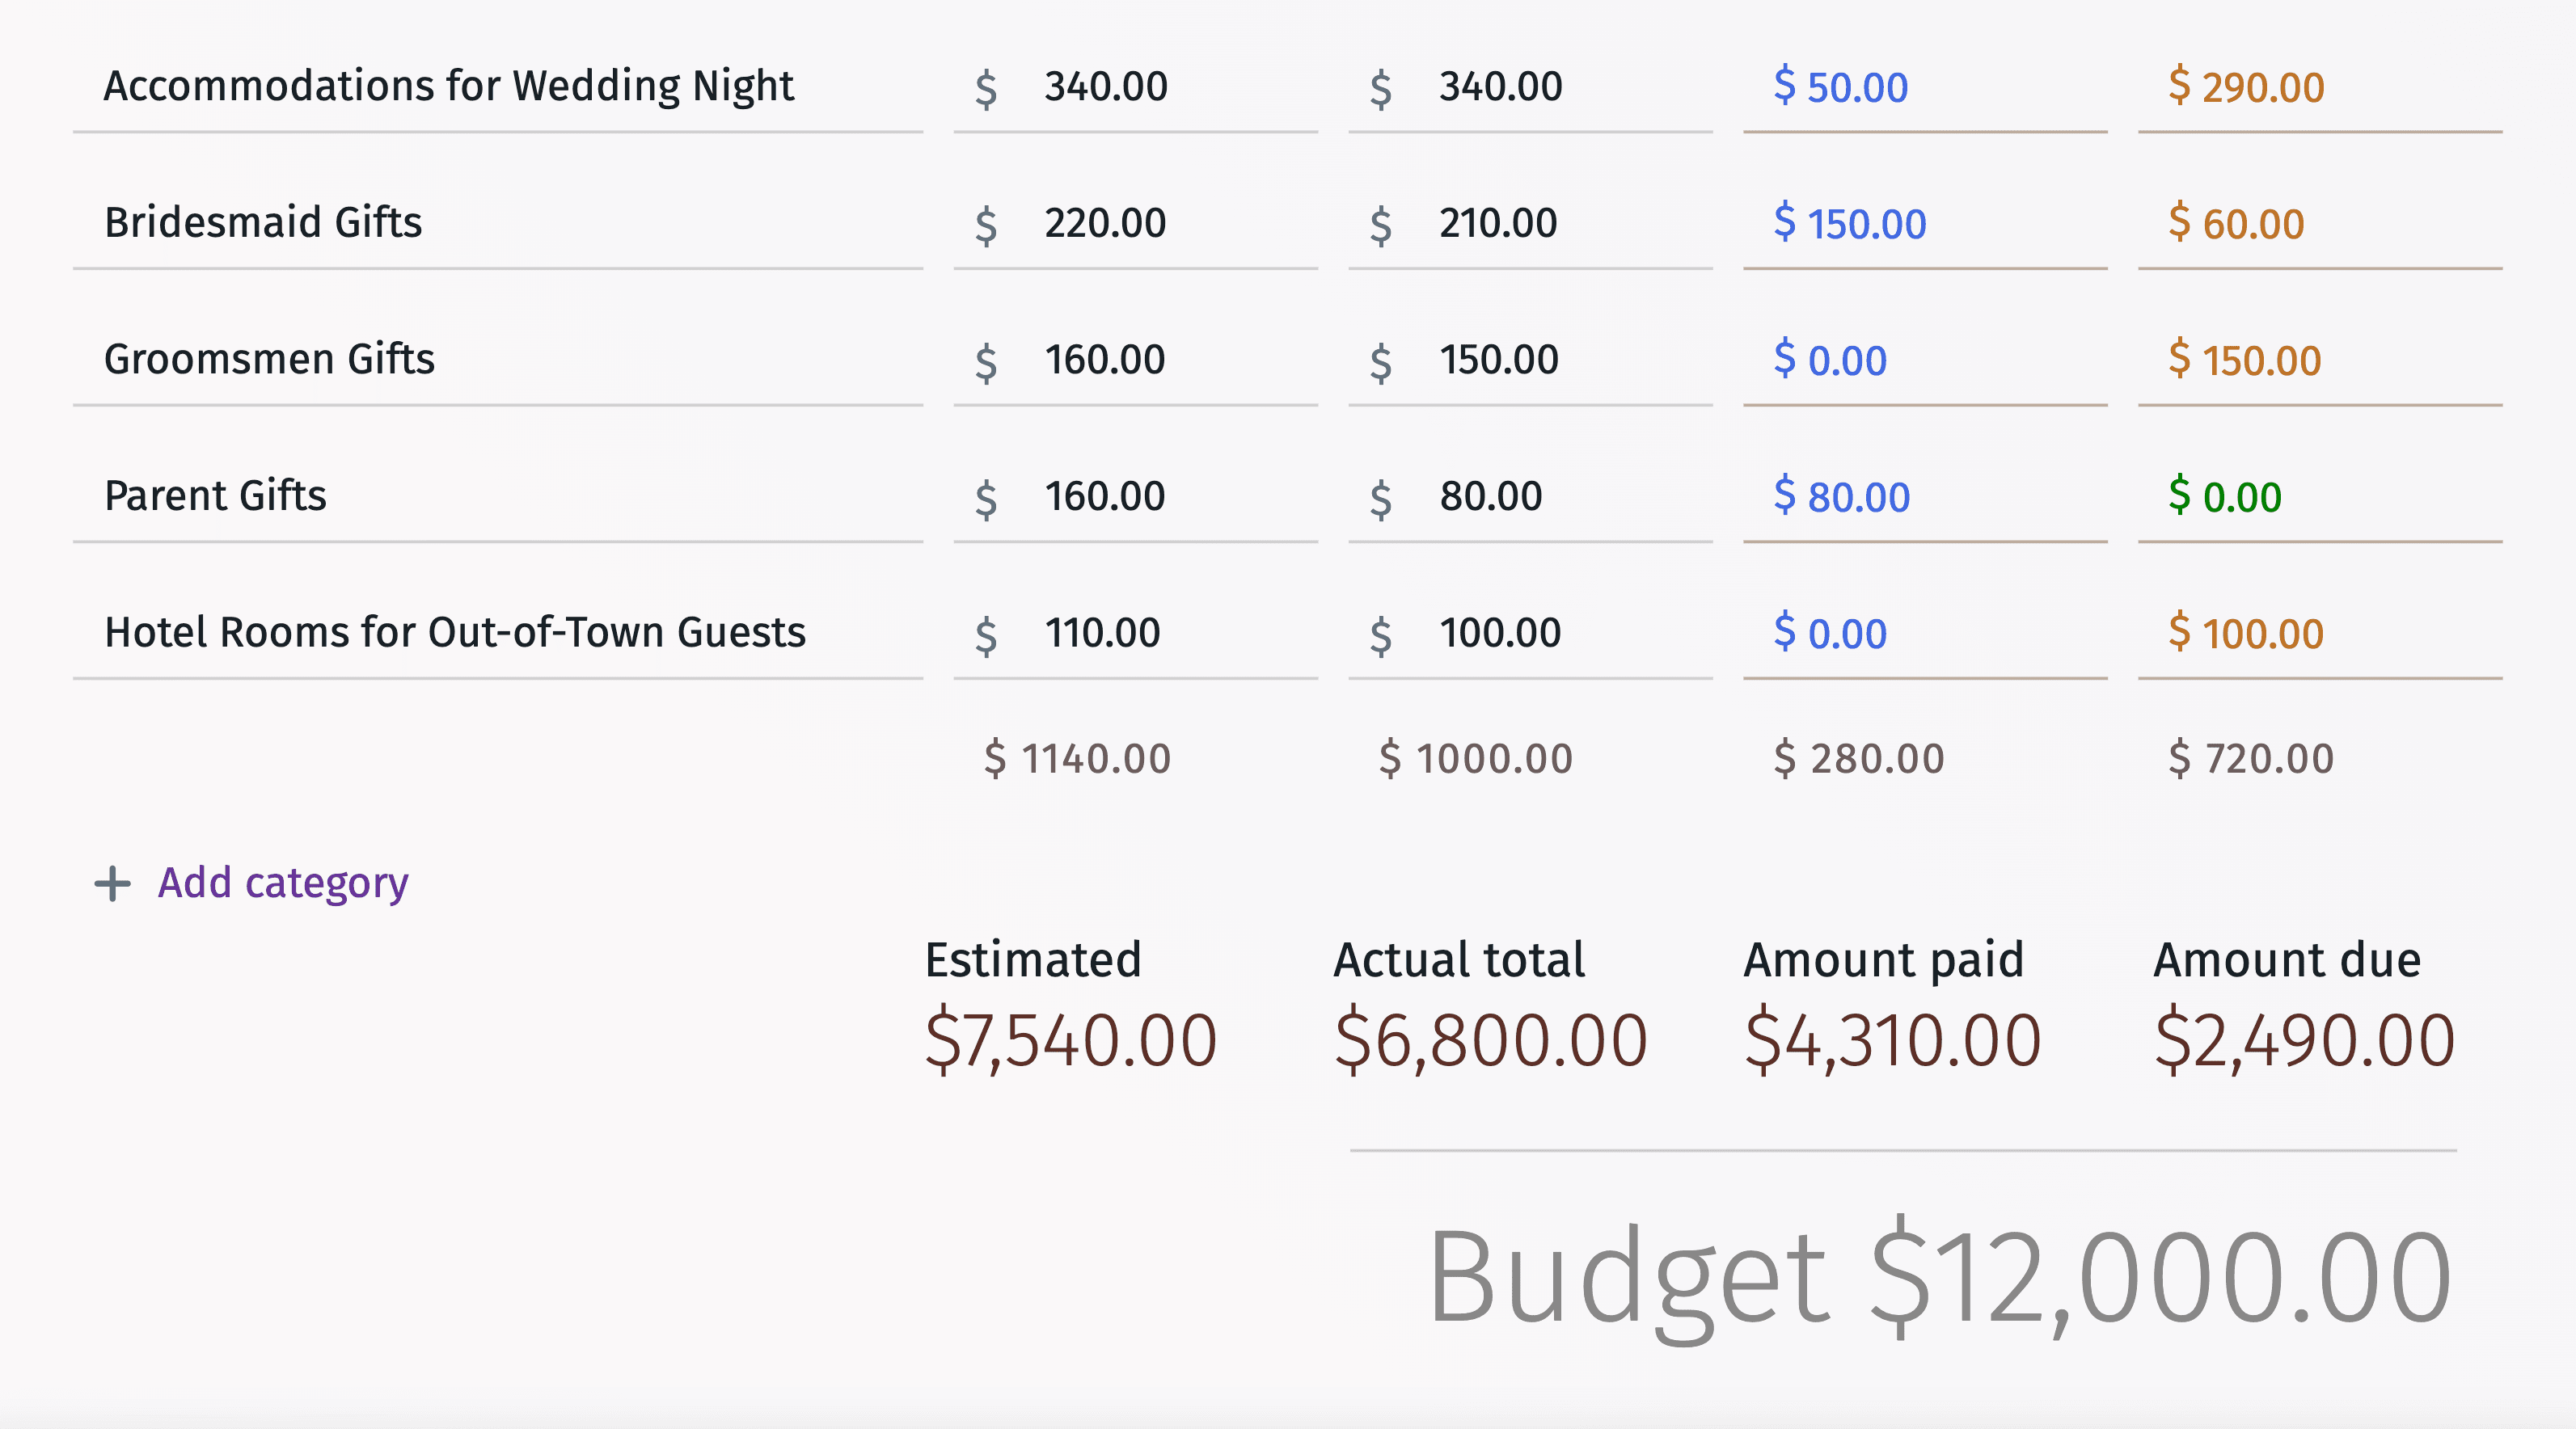 Interface of wedding budget breakdown